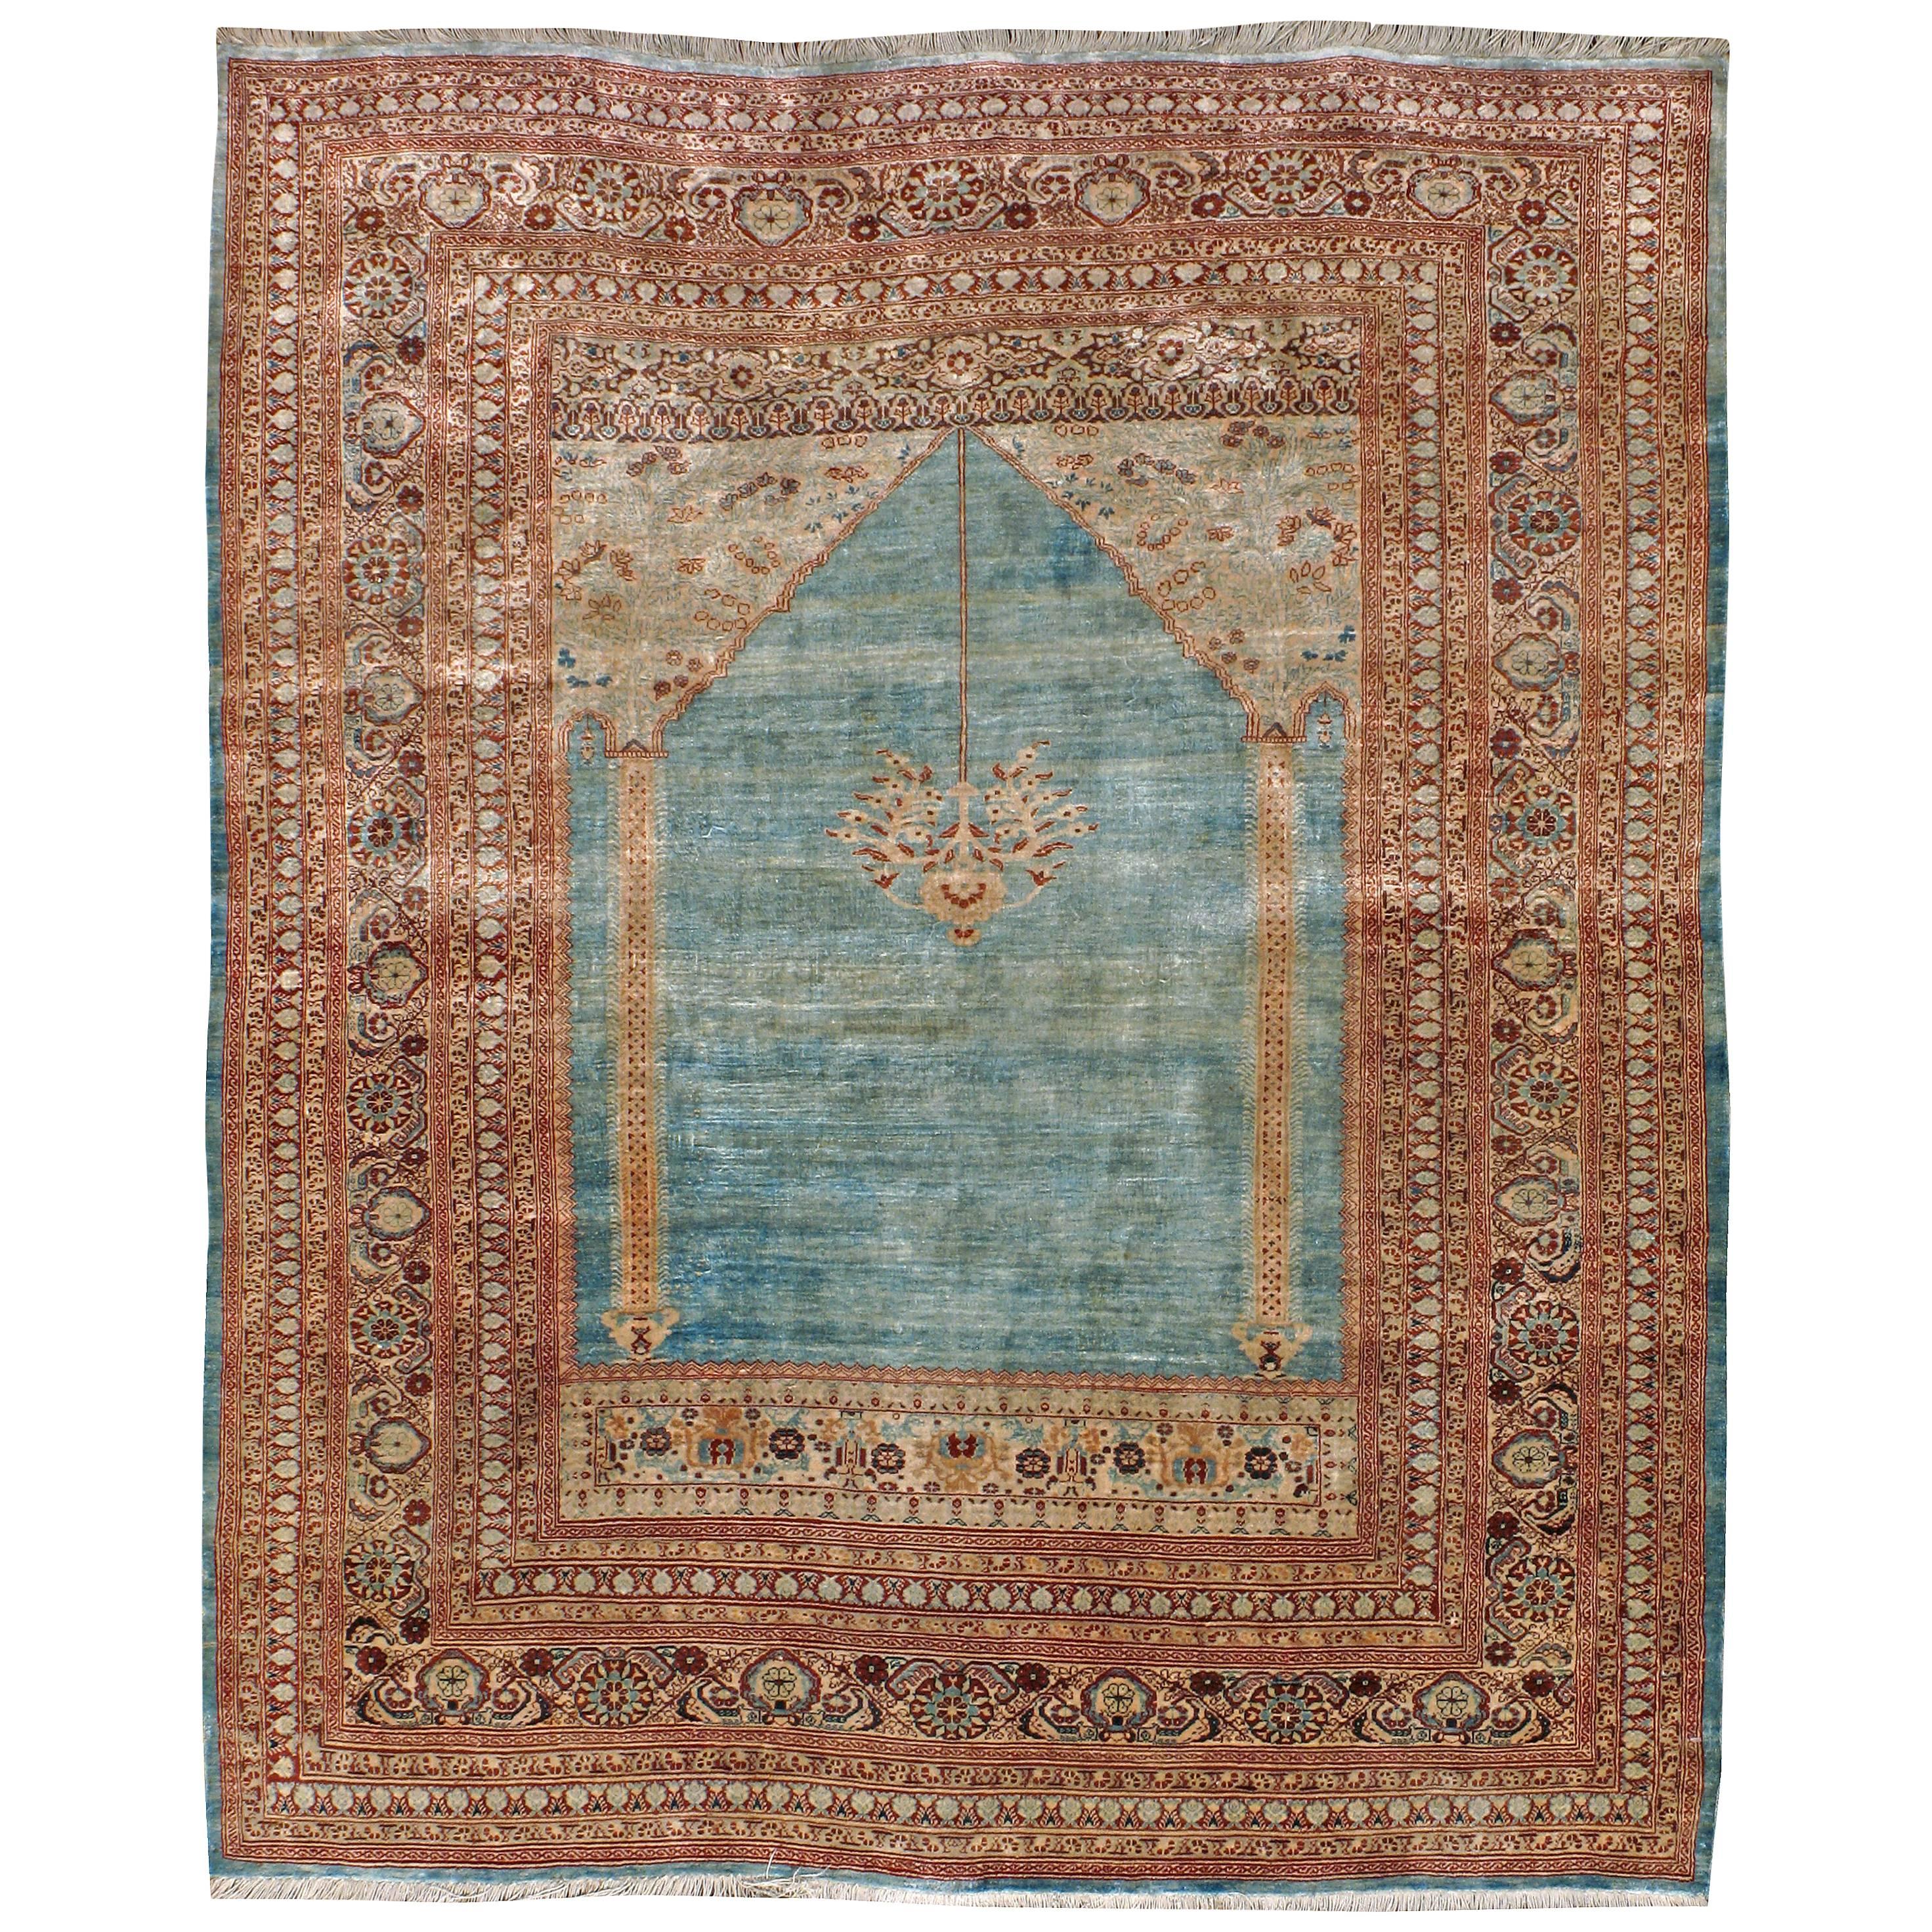 Tapis persan ancien en soie de Tabriz